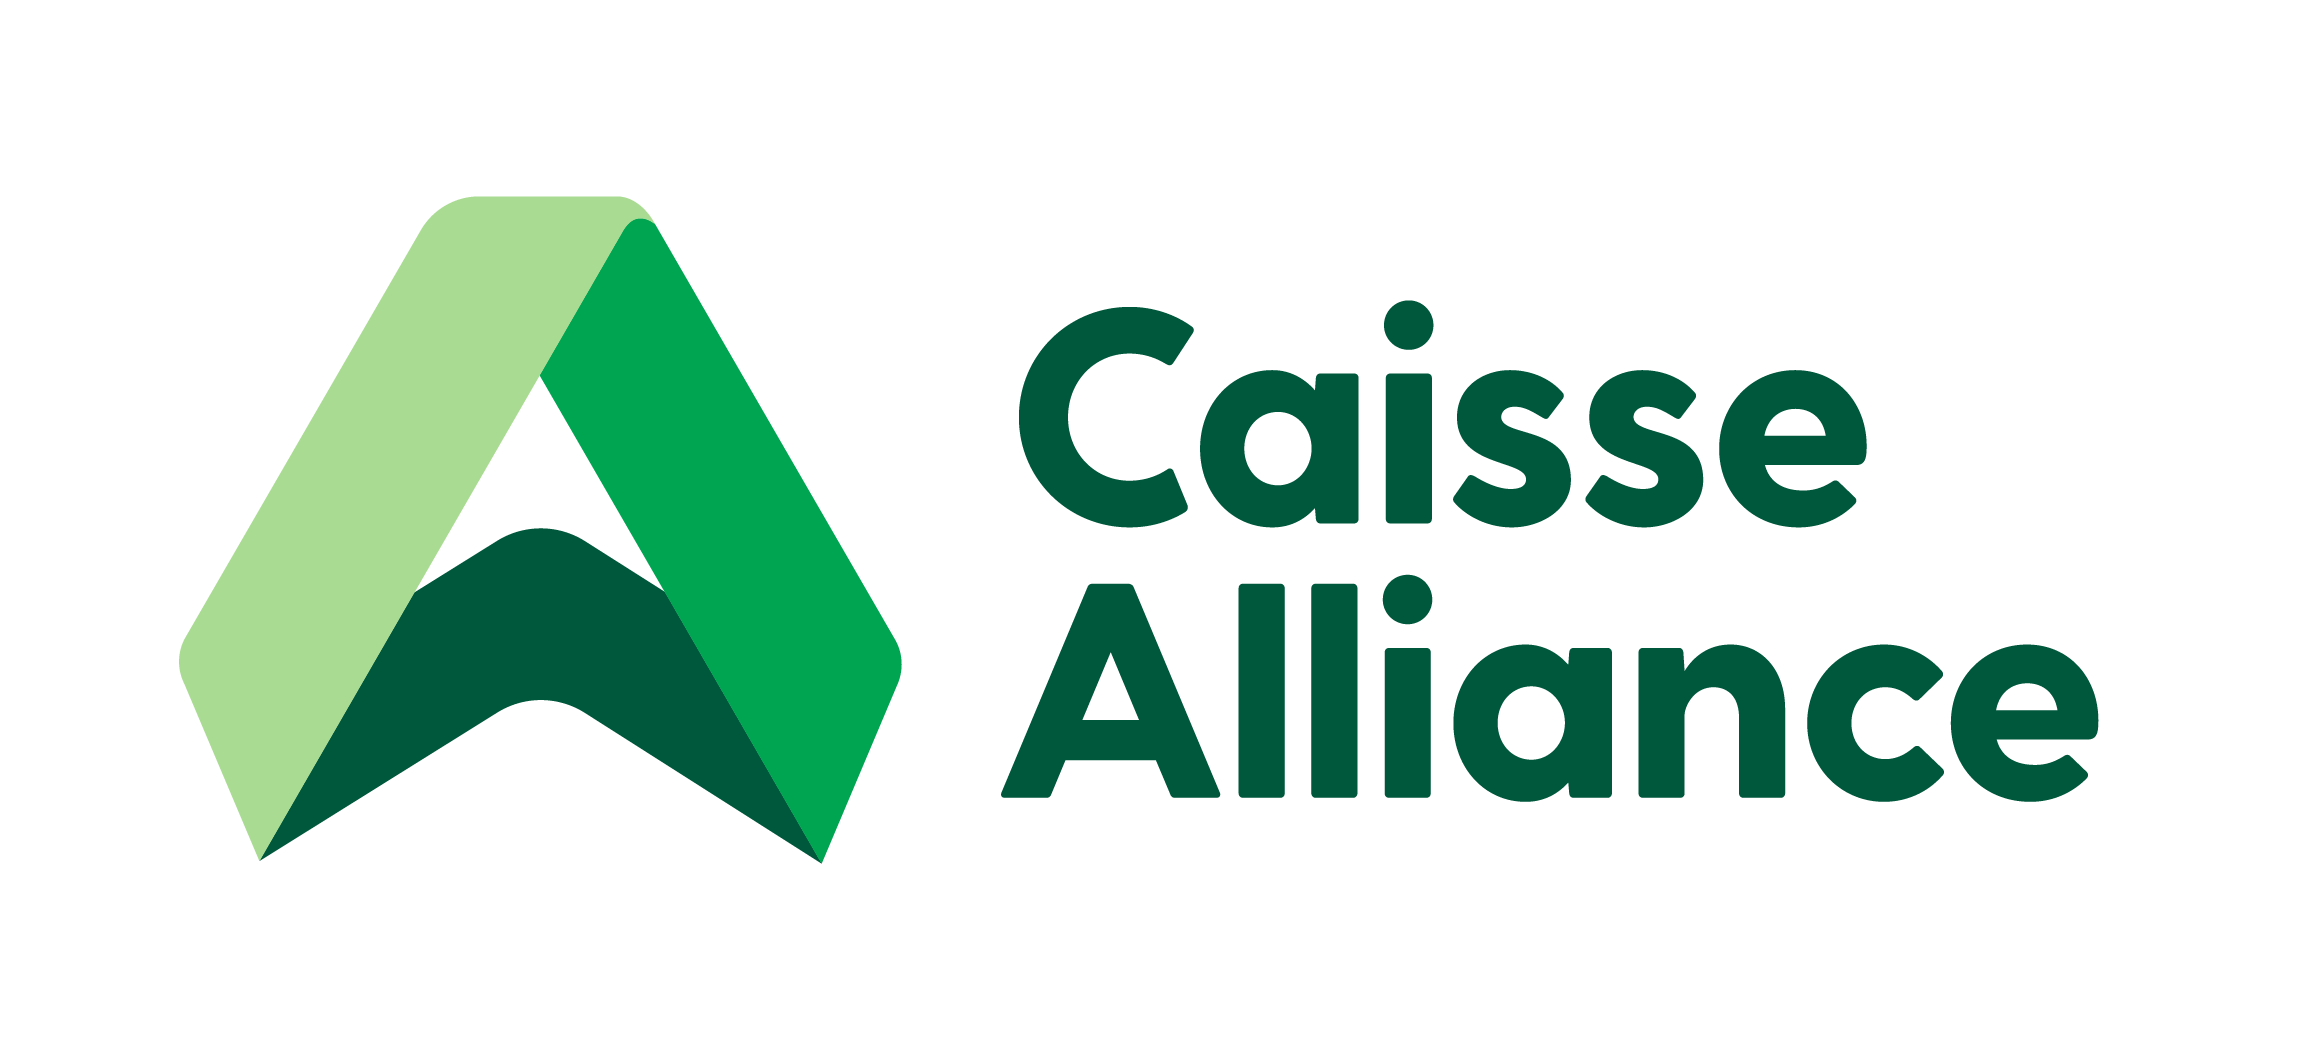 Caisse Alliance - Timmins Branch